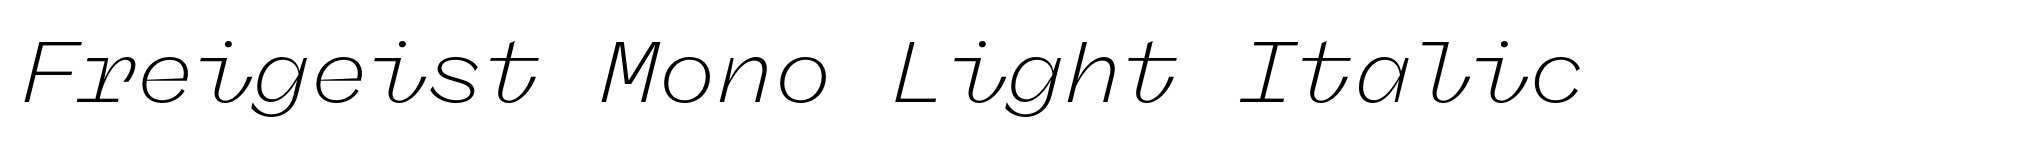 Freigeist Mono Light Italic image